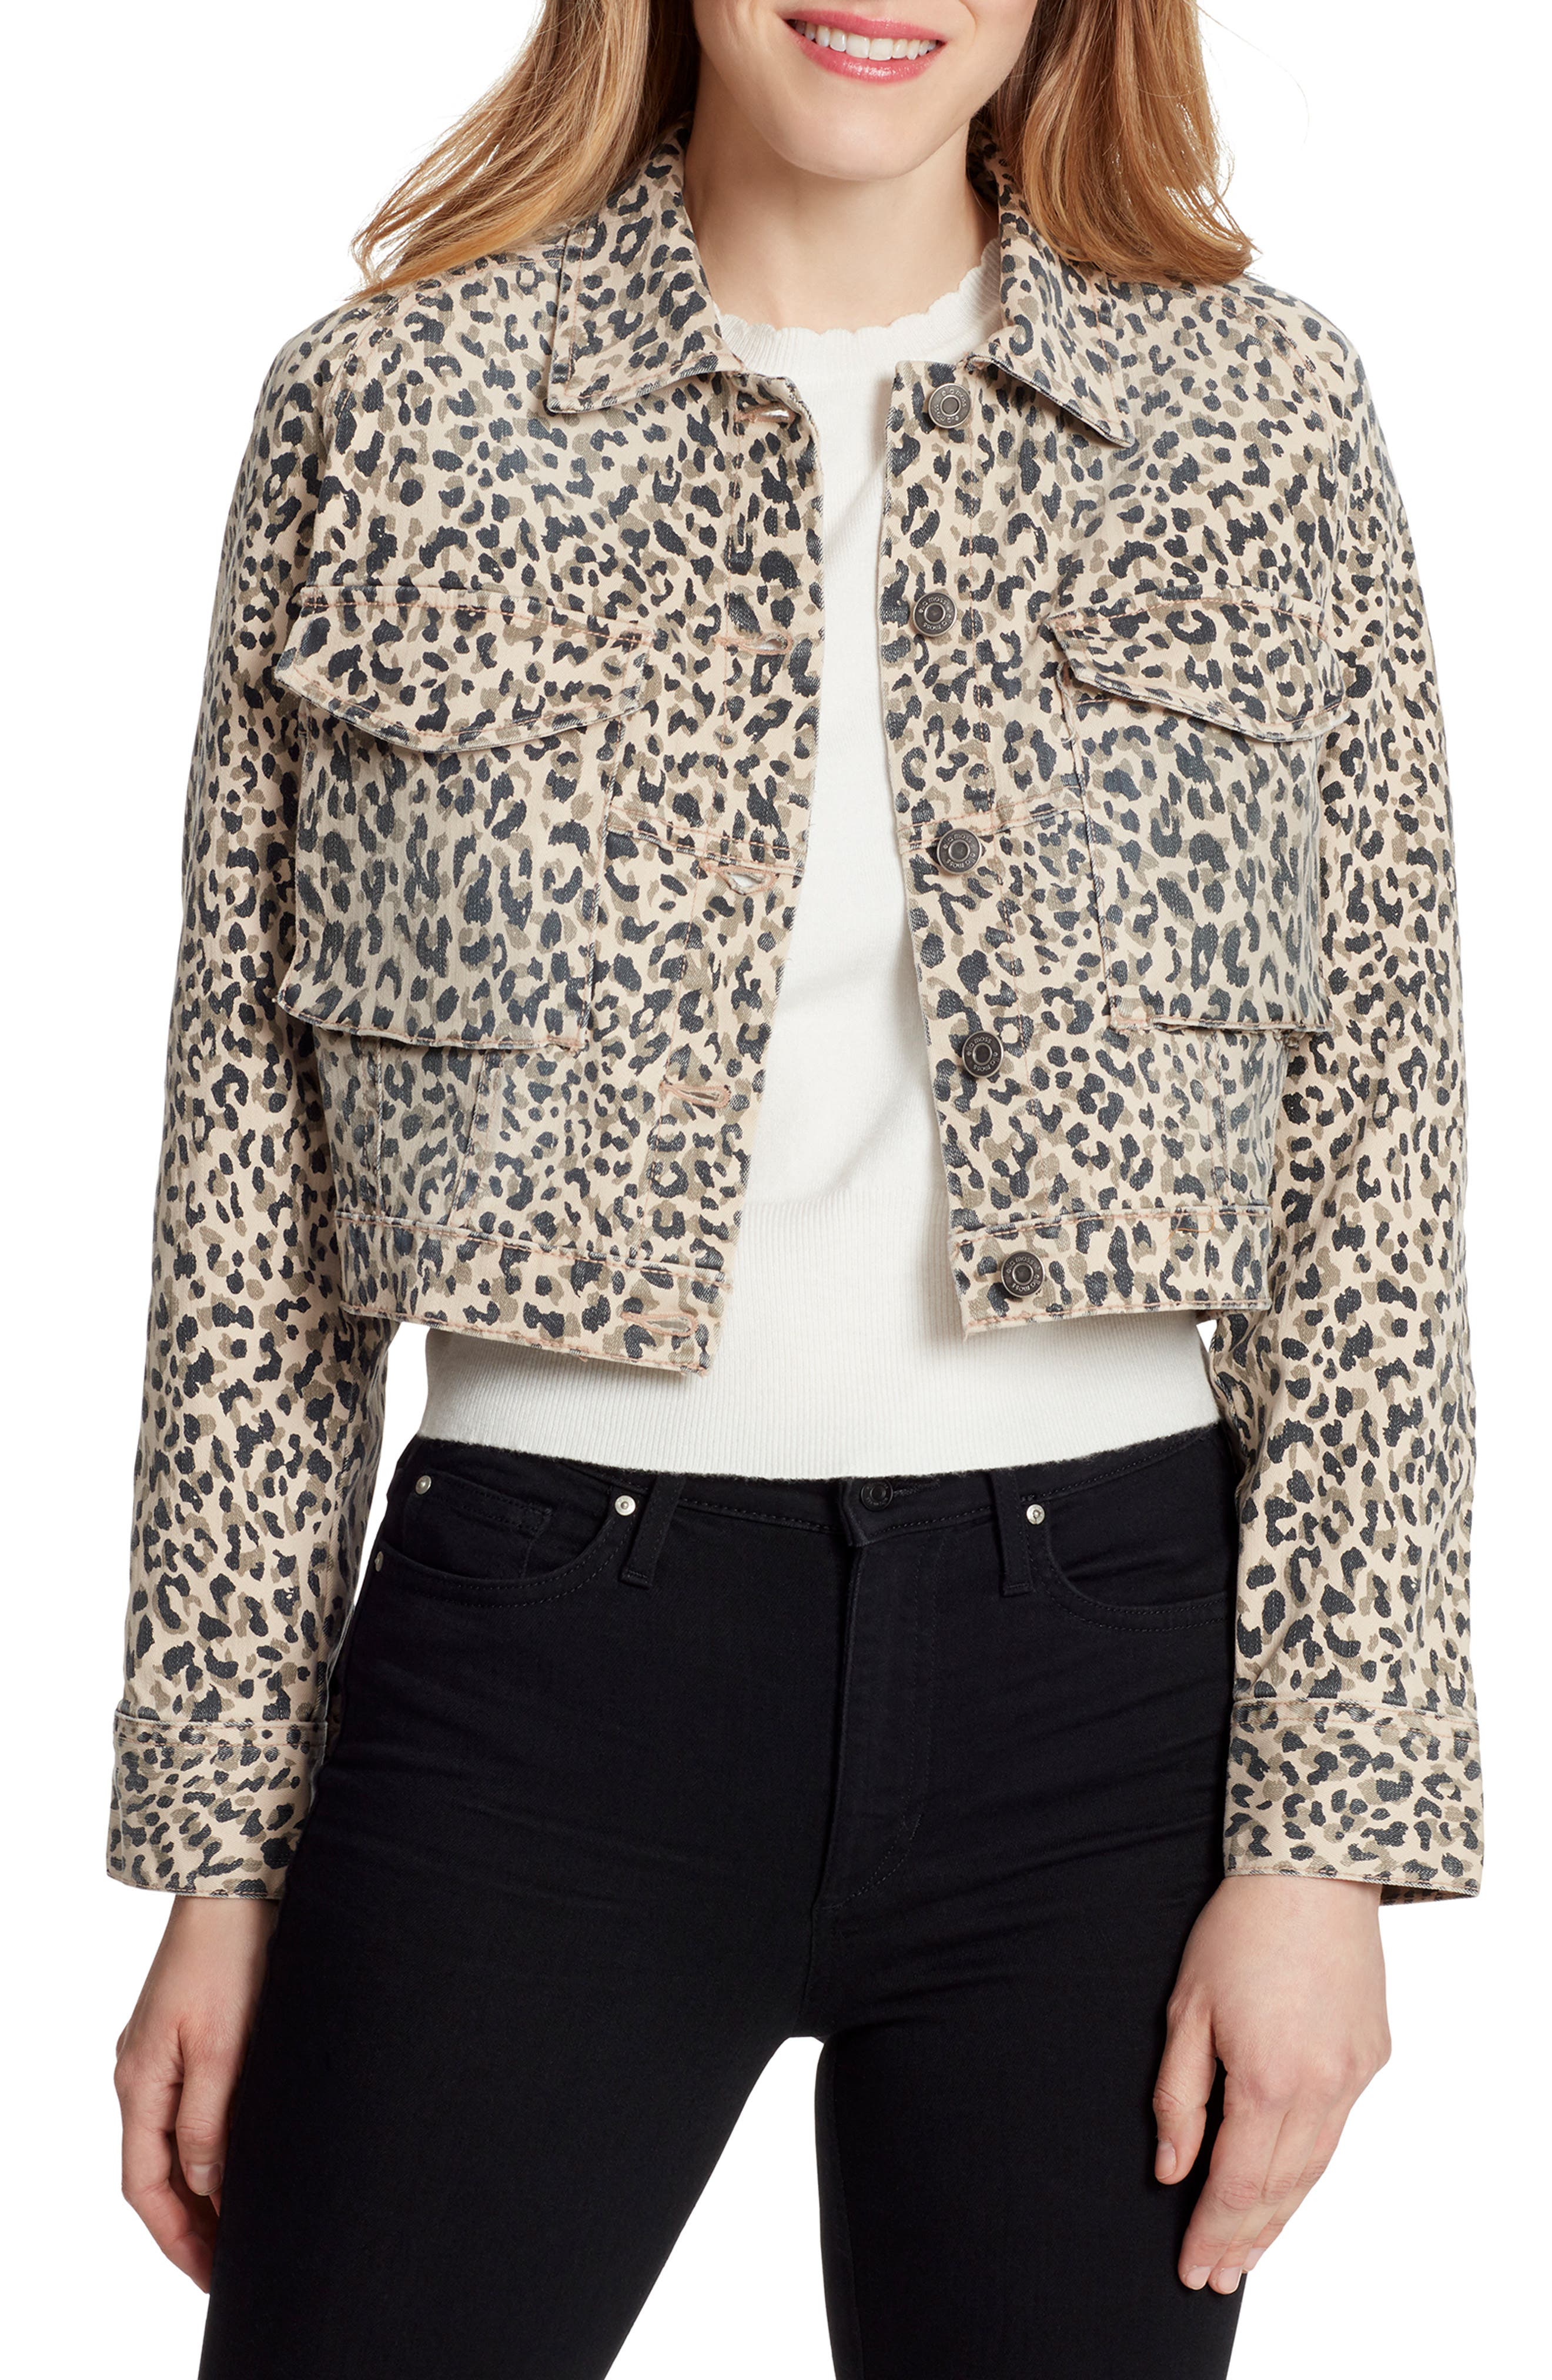 cheetah jean jacket